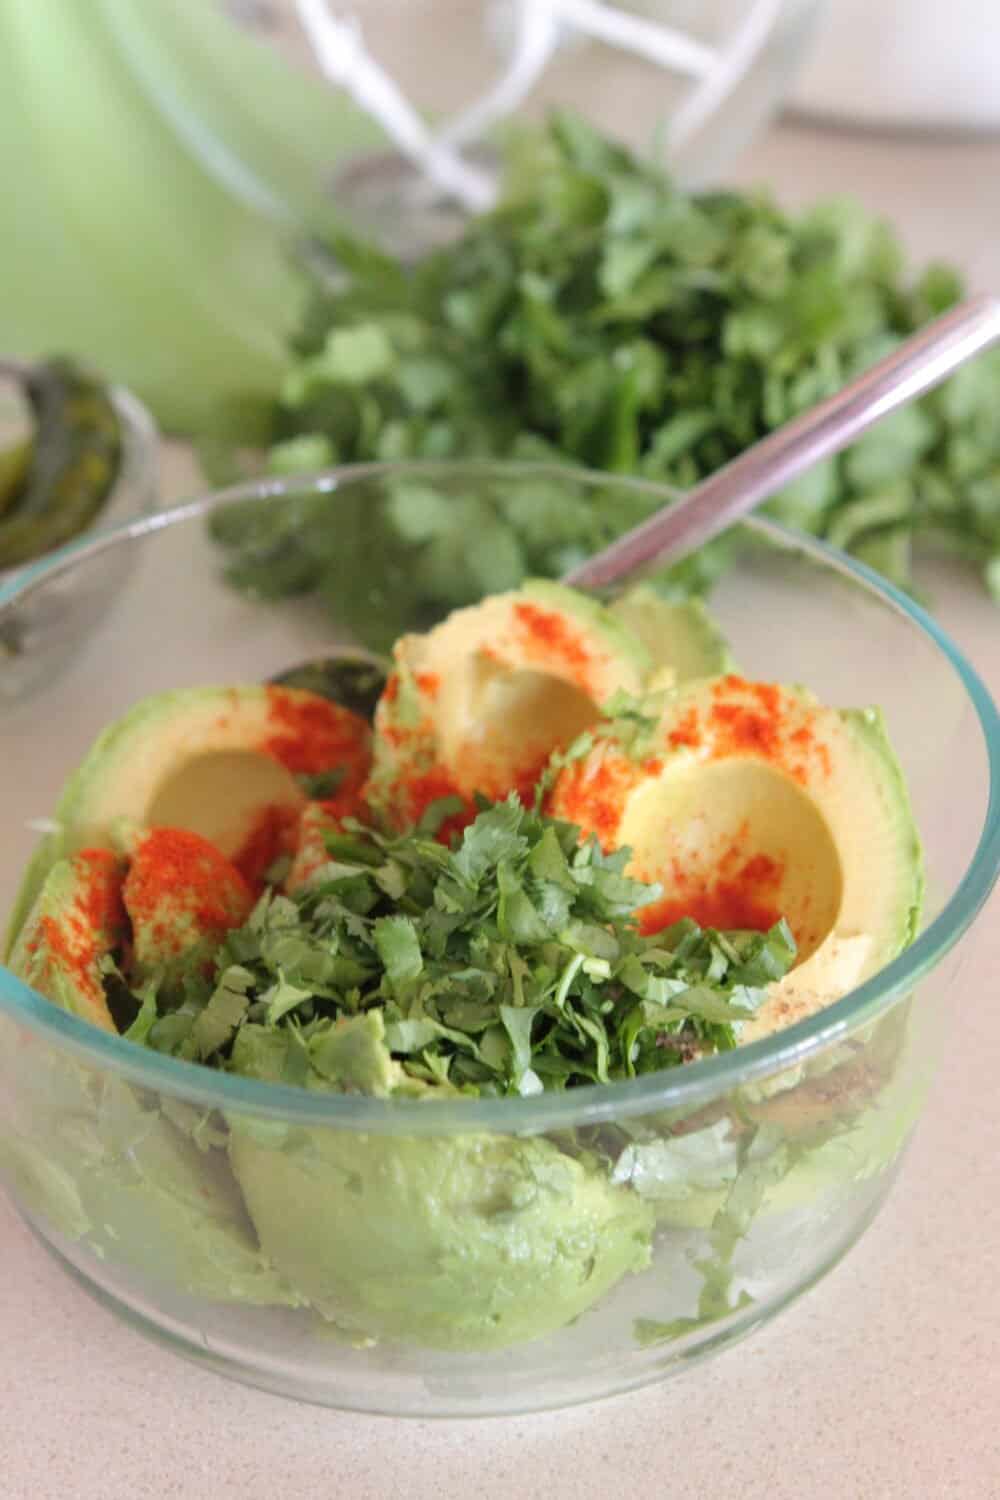 cilantro added to bowl of avocados